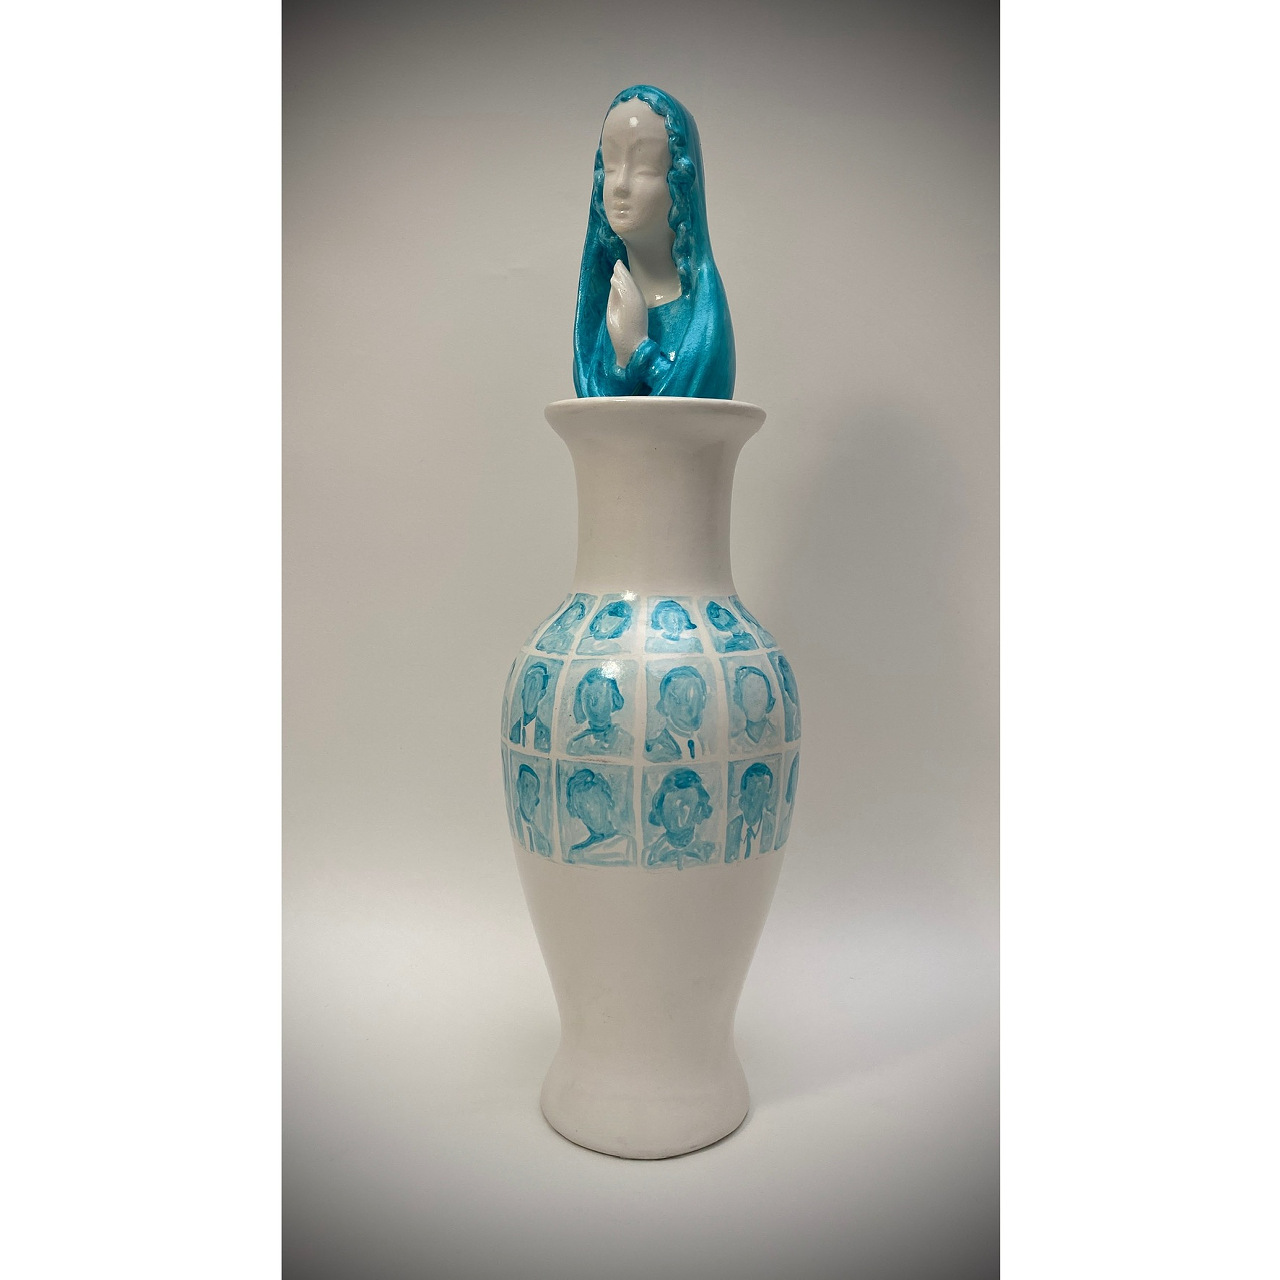 “LOST IN TEXAS (April 16, 2020),” acrylic on ceramic, 13.5” x 4”, $600